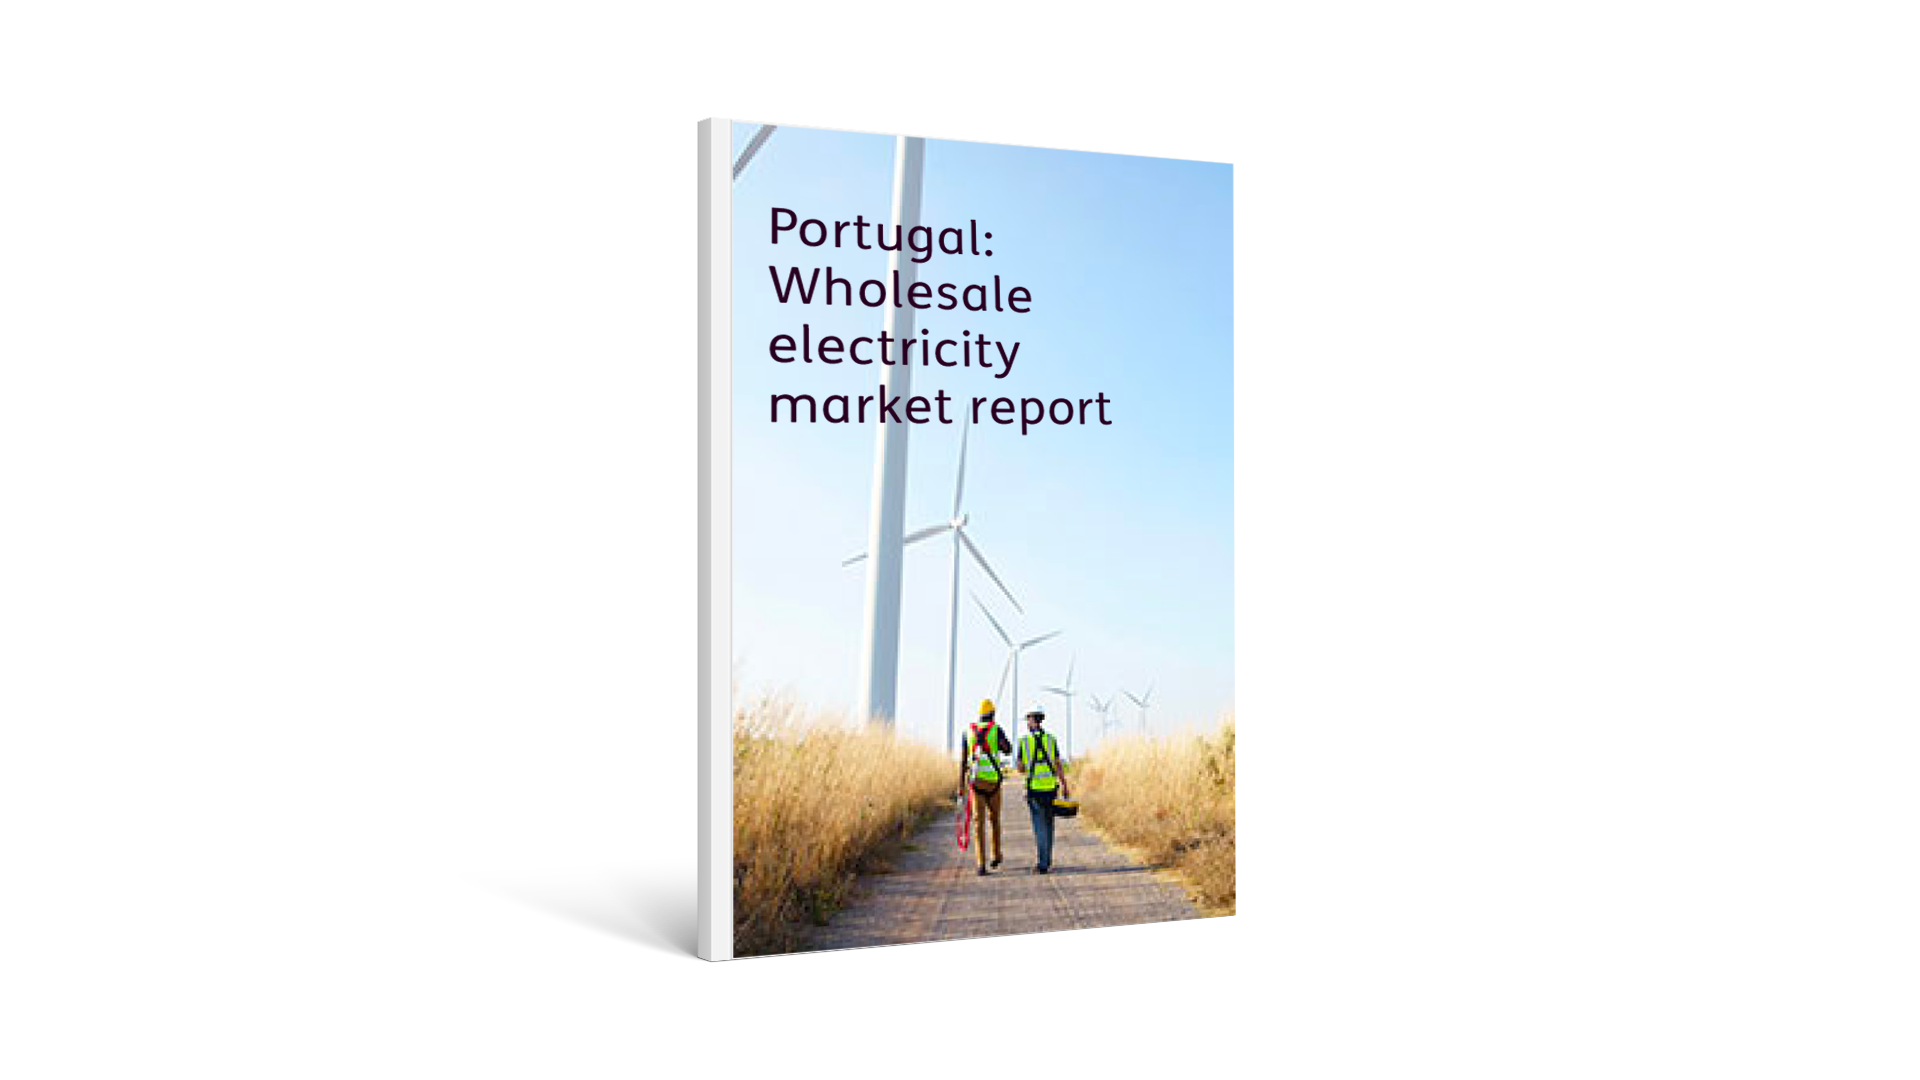 Portugal: Wholesale electricity market report